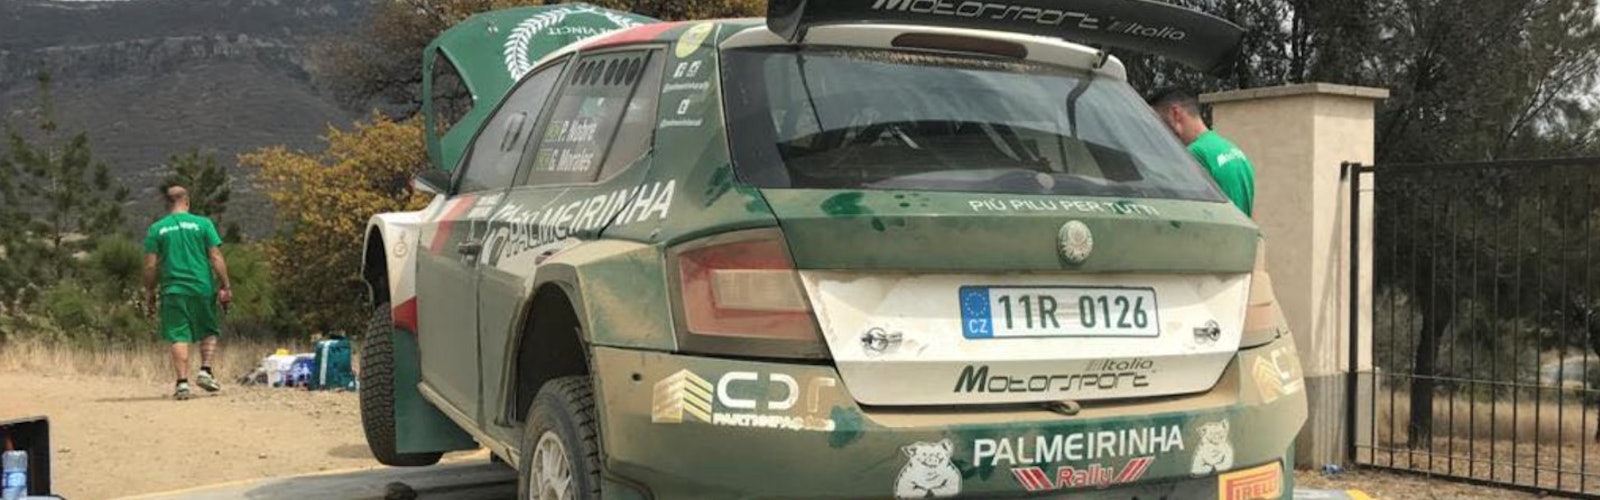 Motorsport Italia Rally Mexico